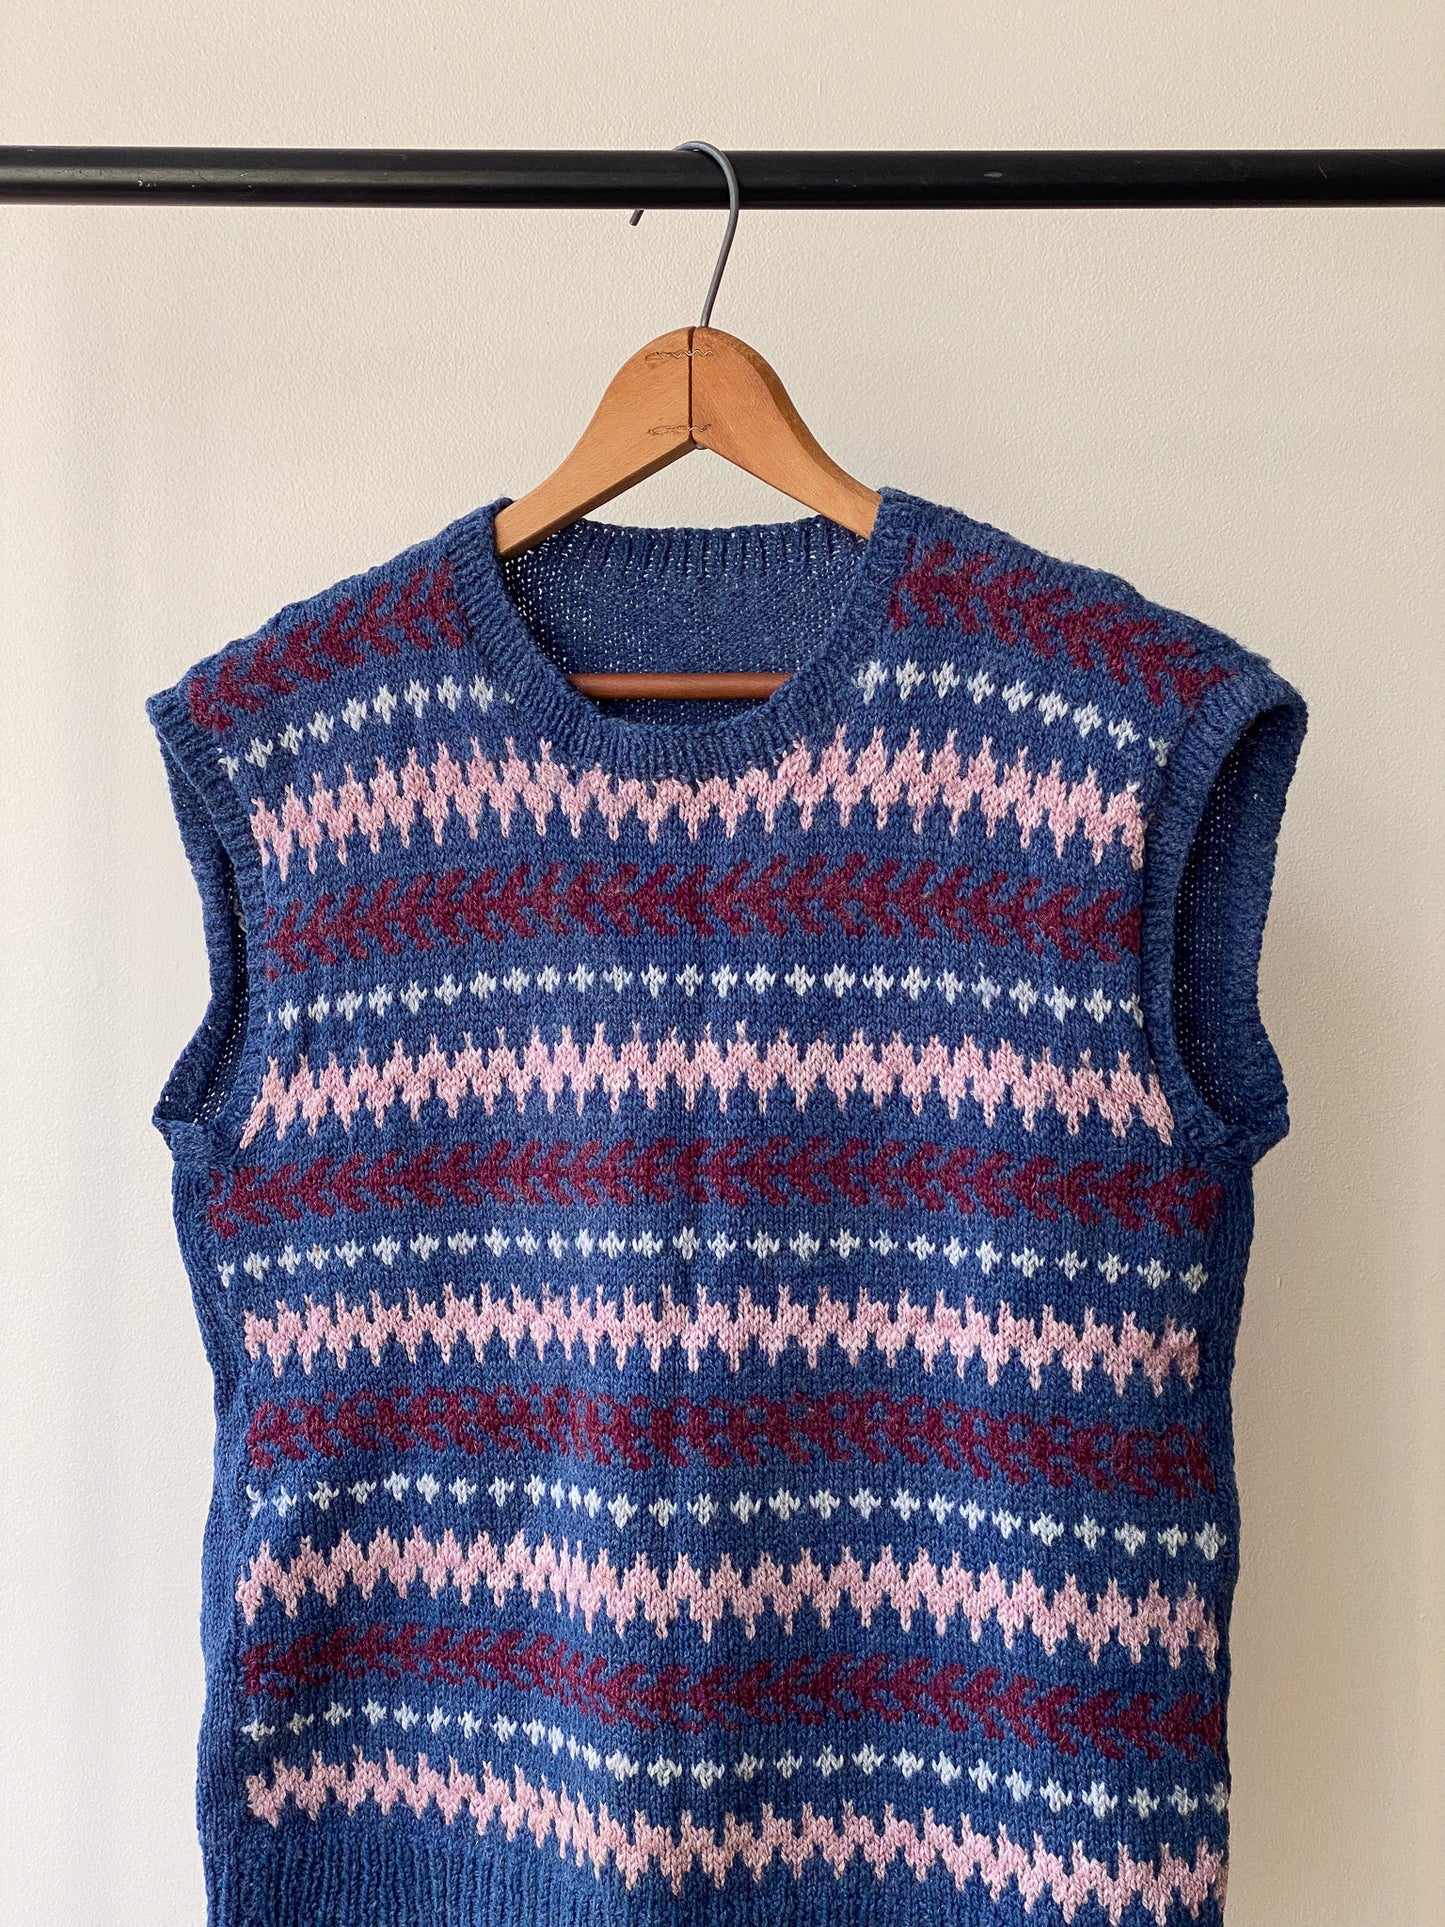 Handmade Patterned Sweater Vest—[M]